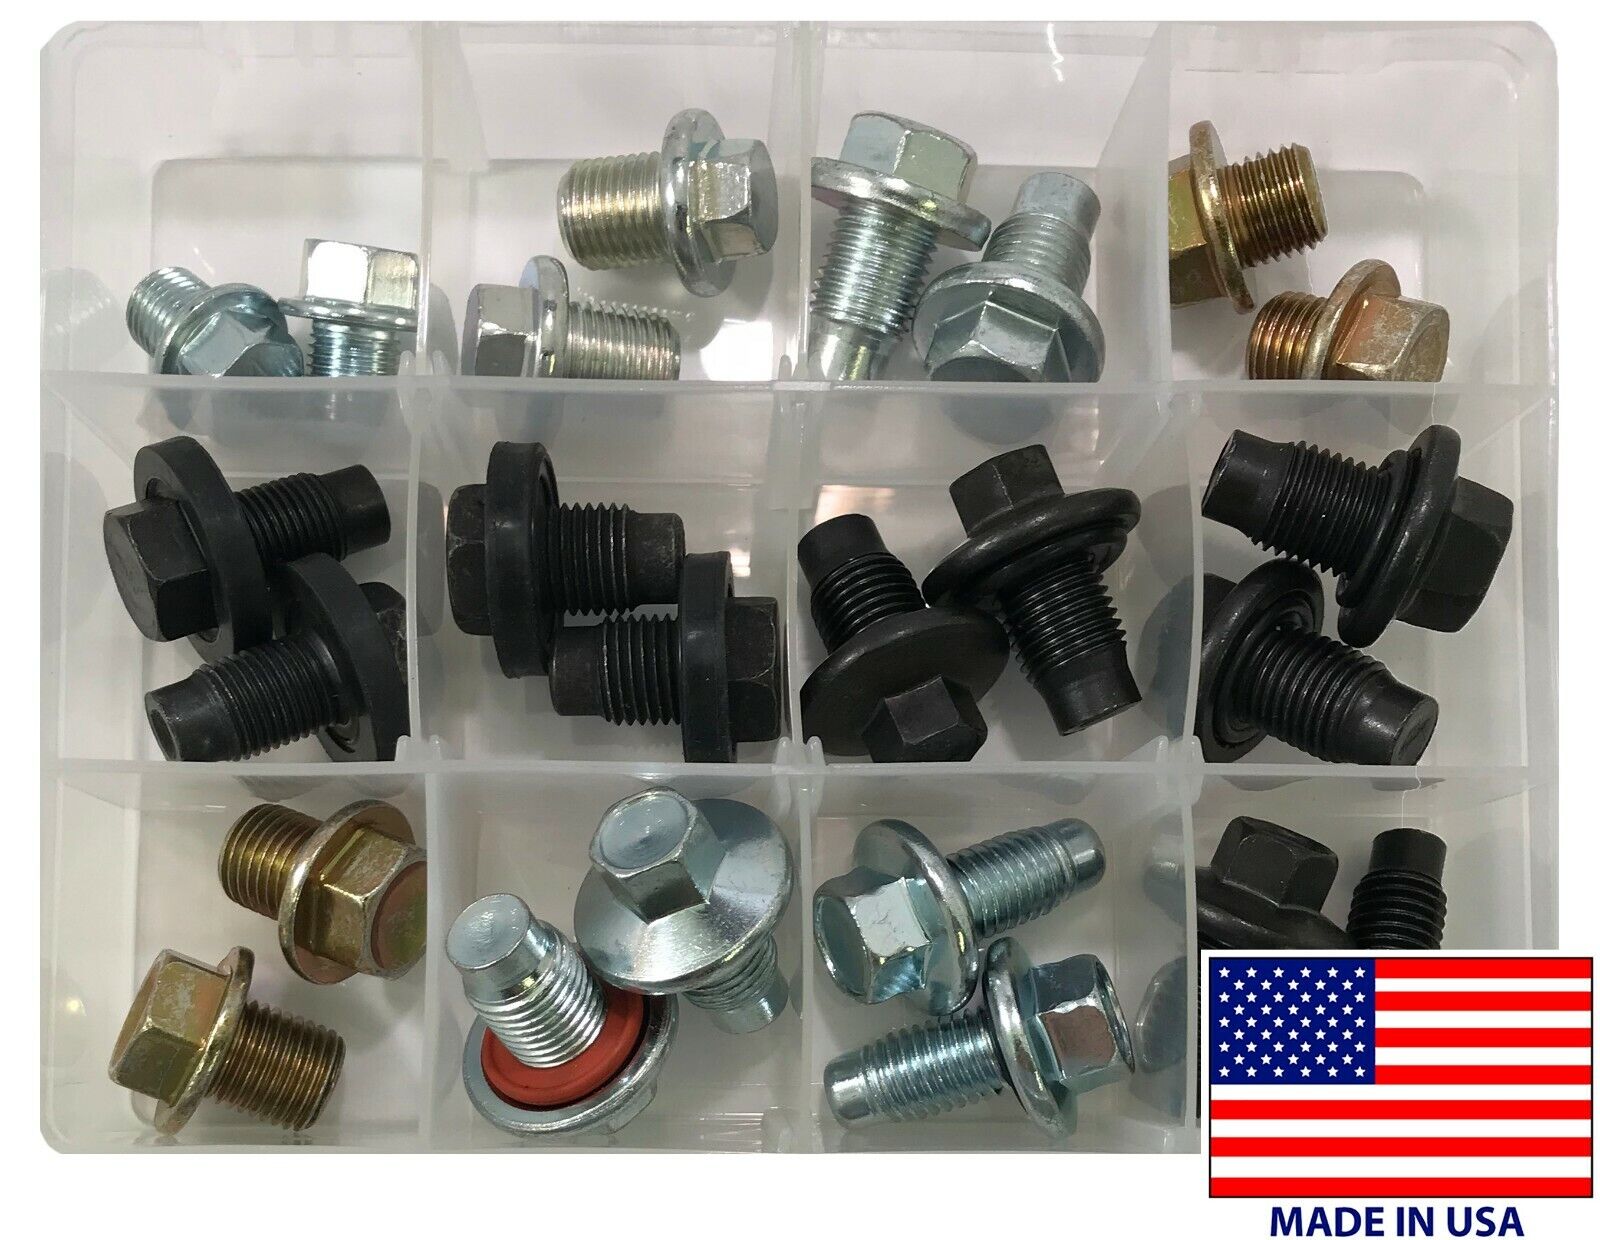 24 Piece Oil Drain Plug Assortment Kit - Top 12 Most Popular Sizes - USA Made